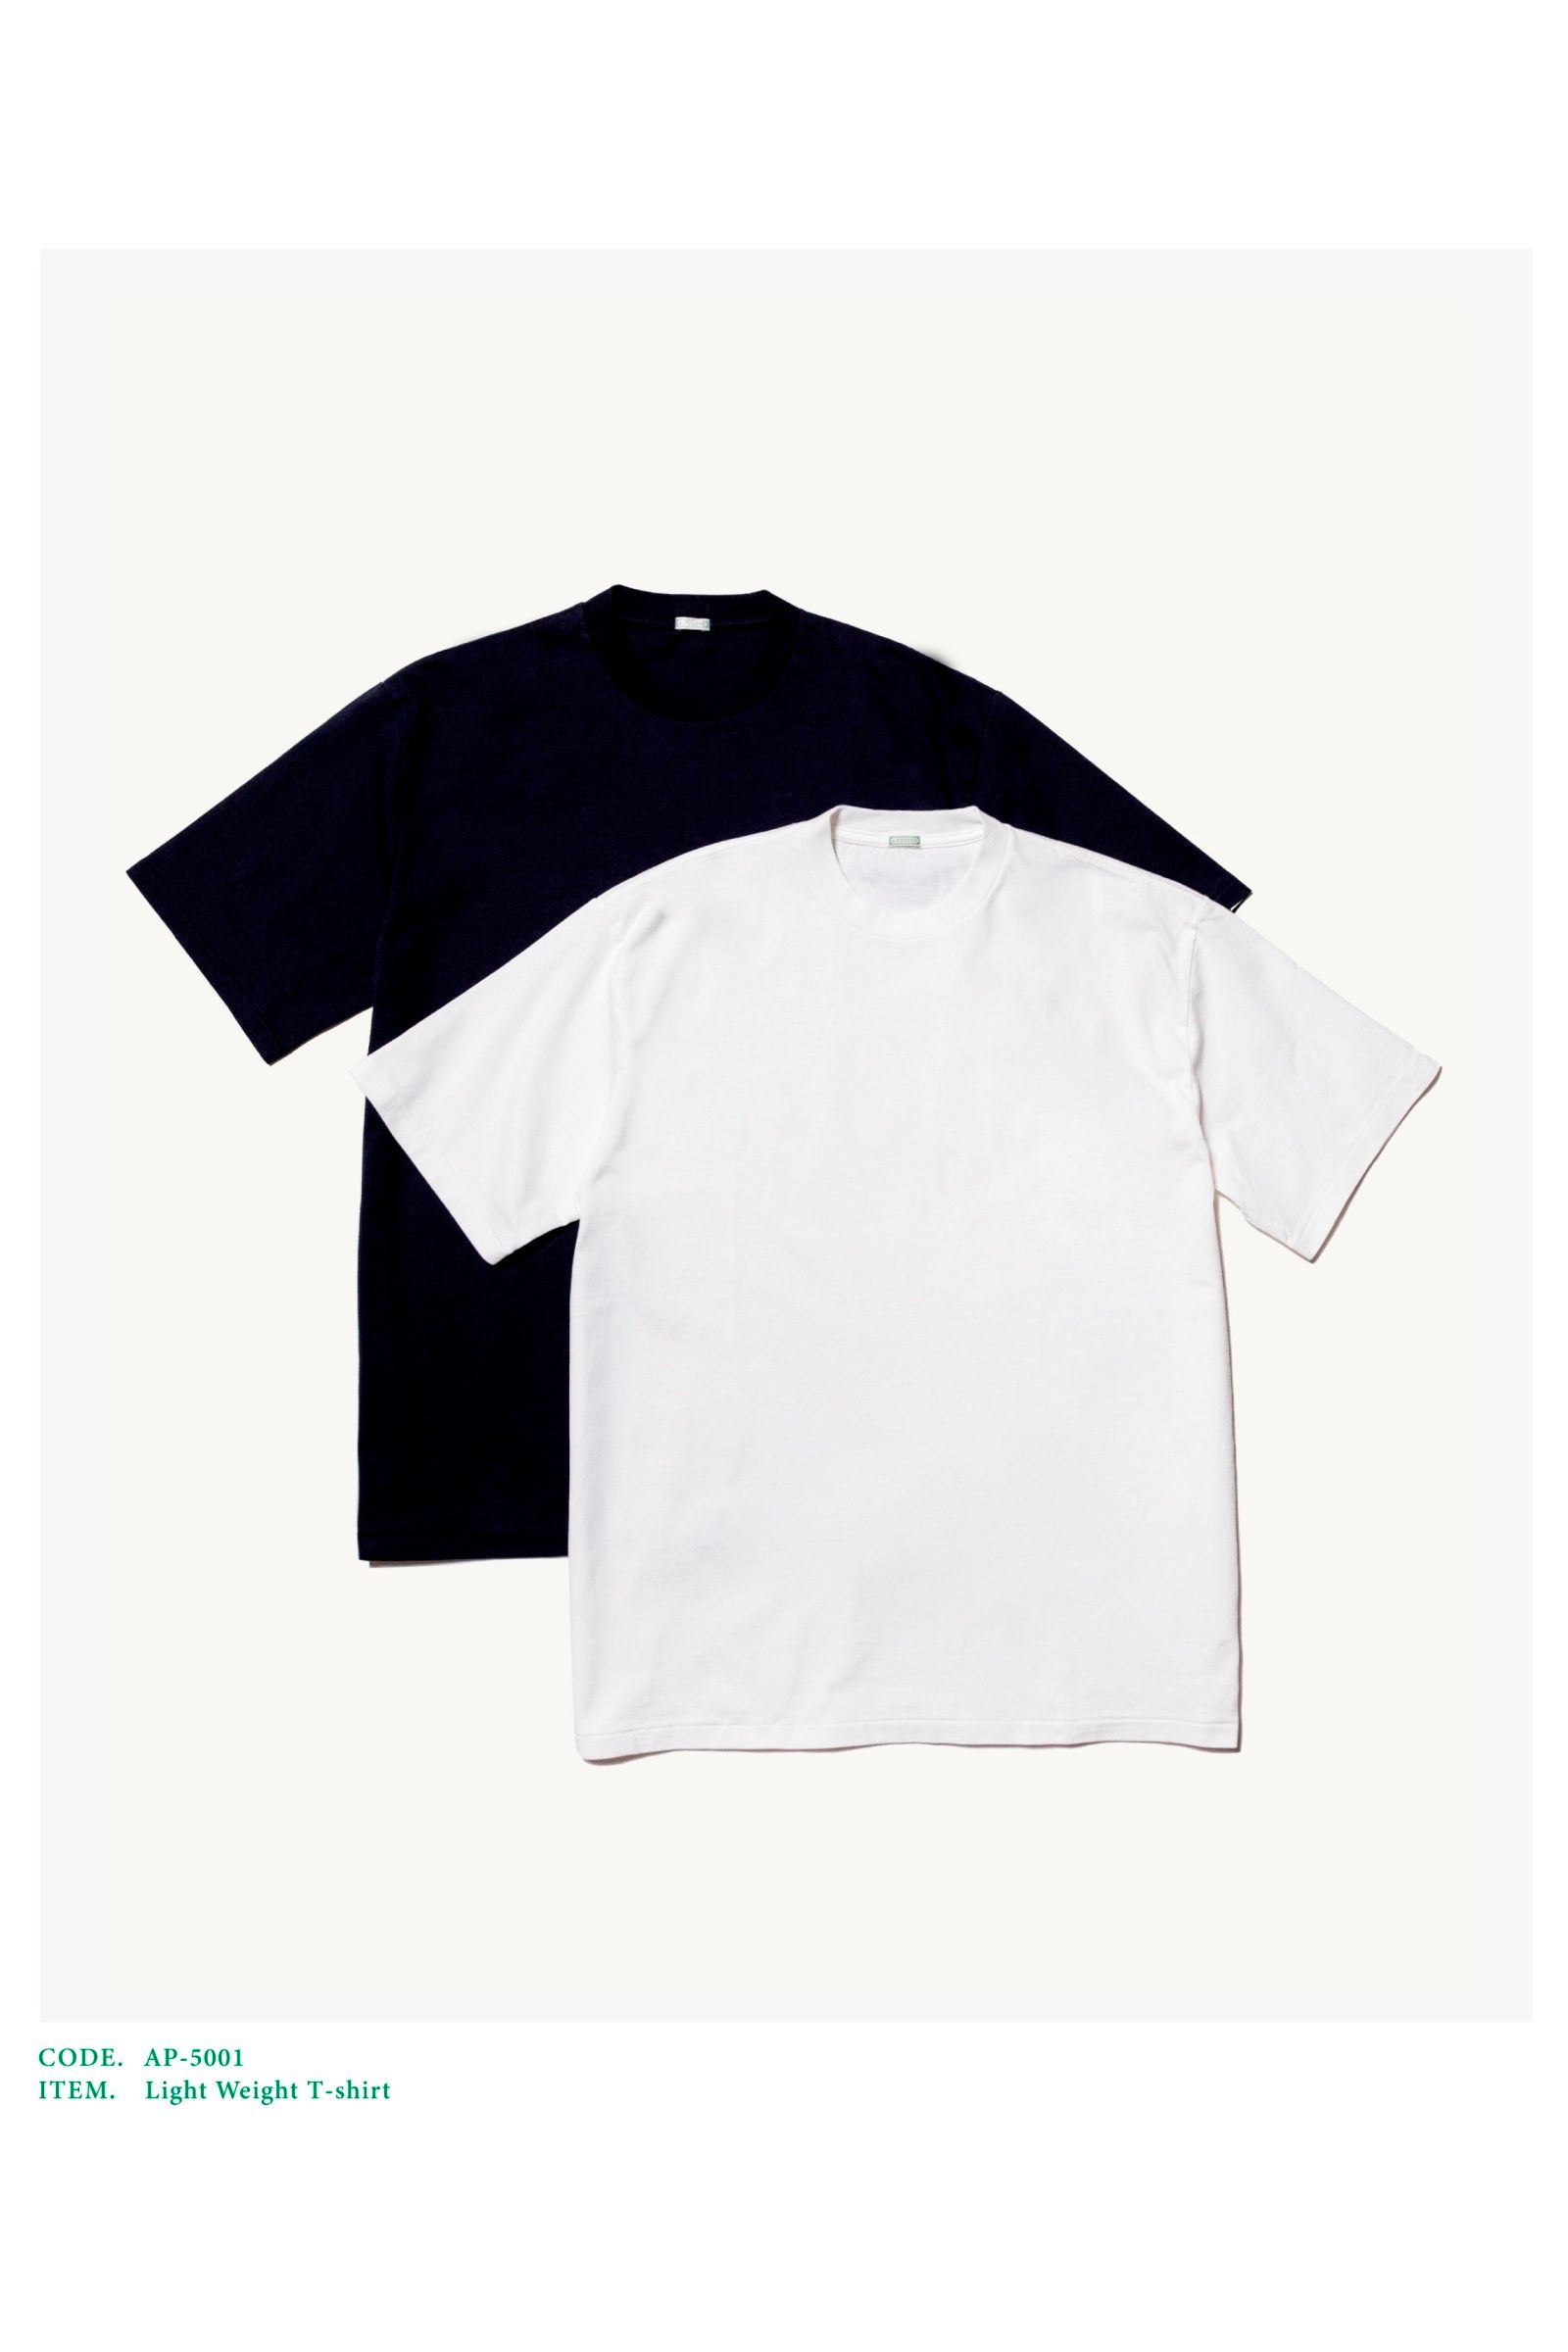 Light Weight T-shirts-White-24STYLE1 - 2